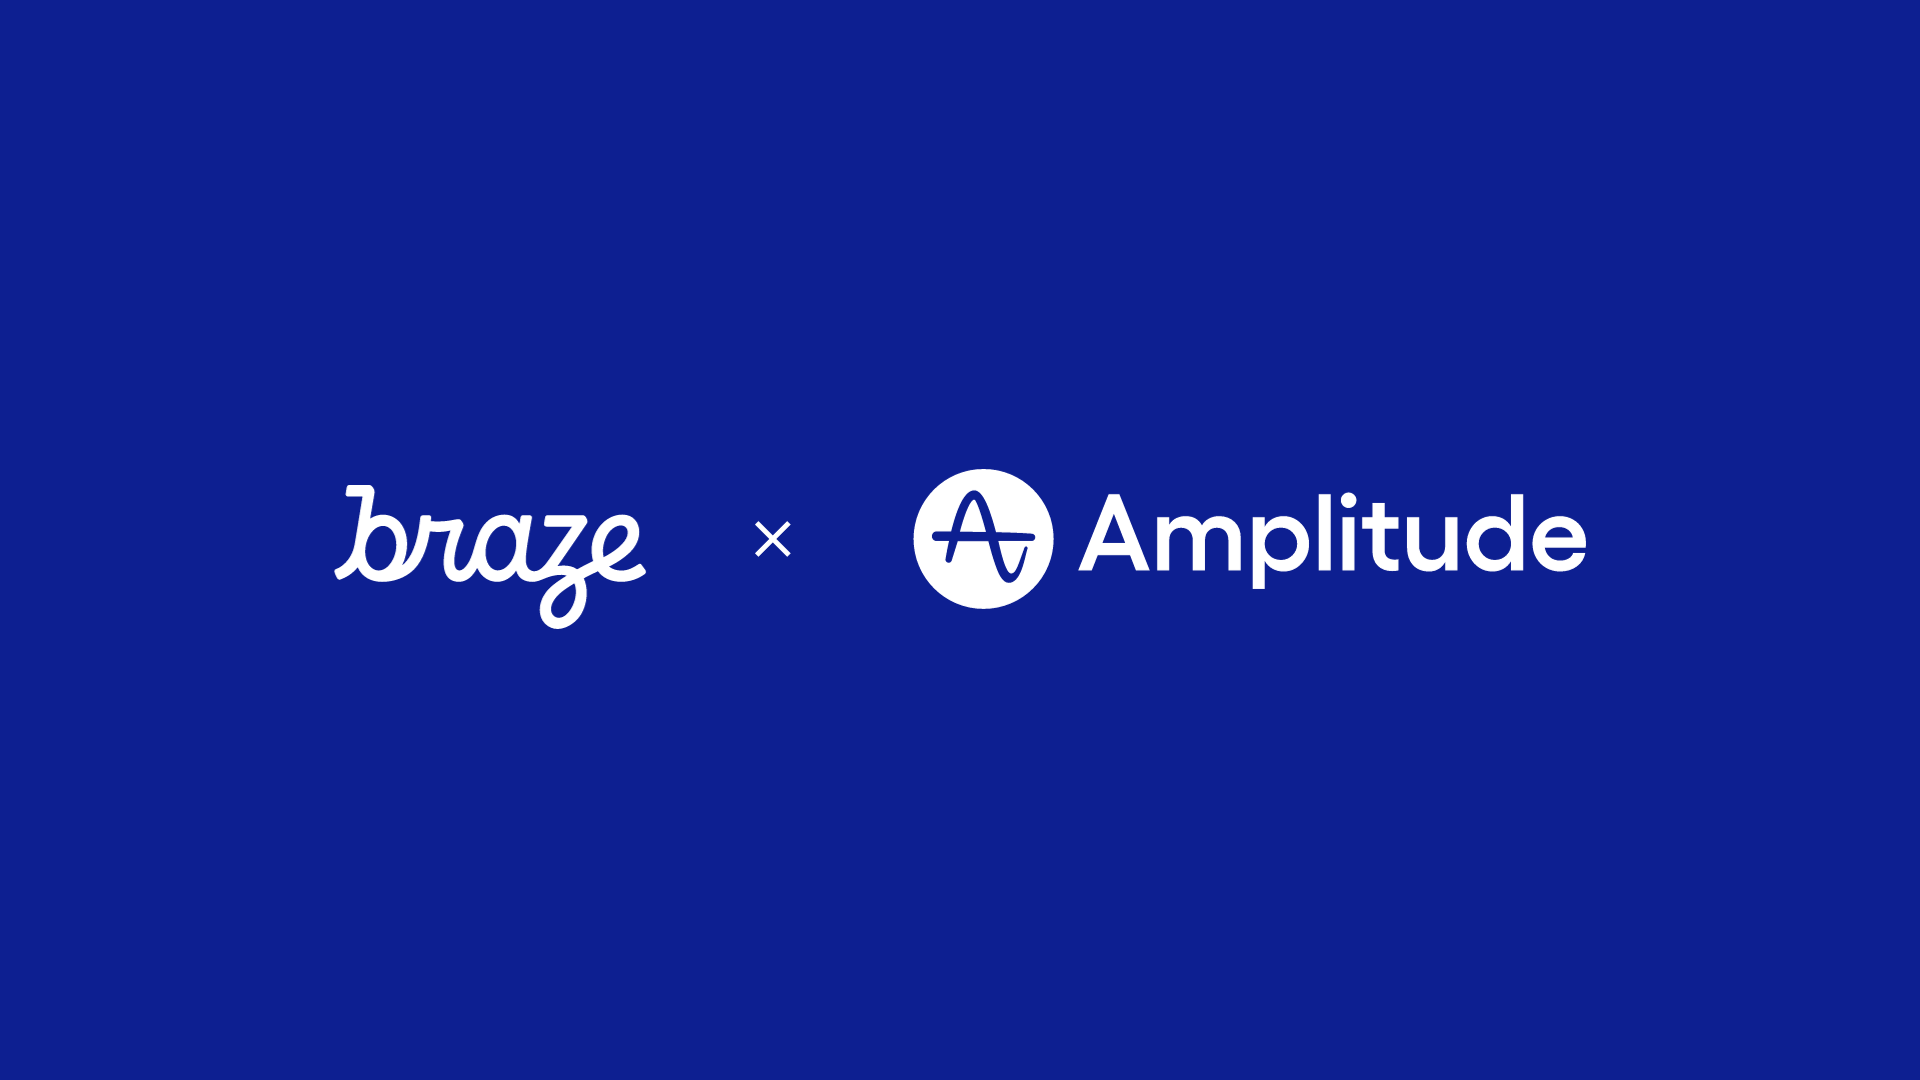 Braze and Amplitude logos